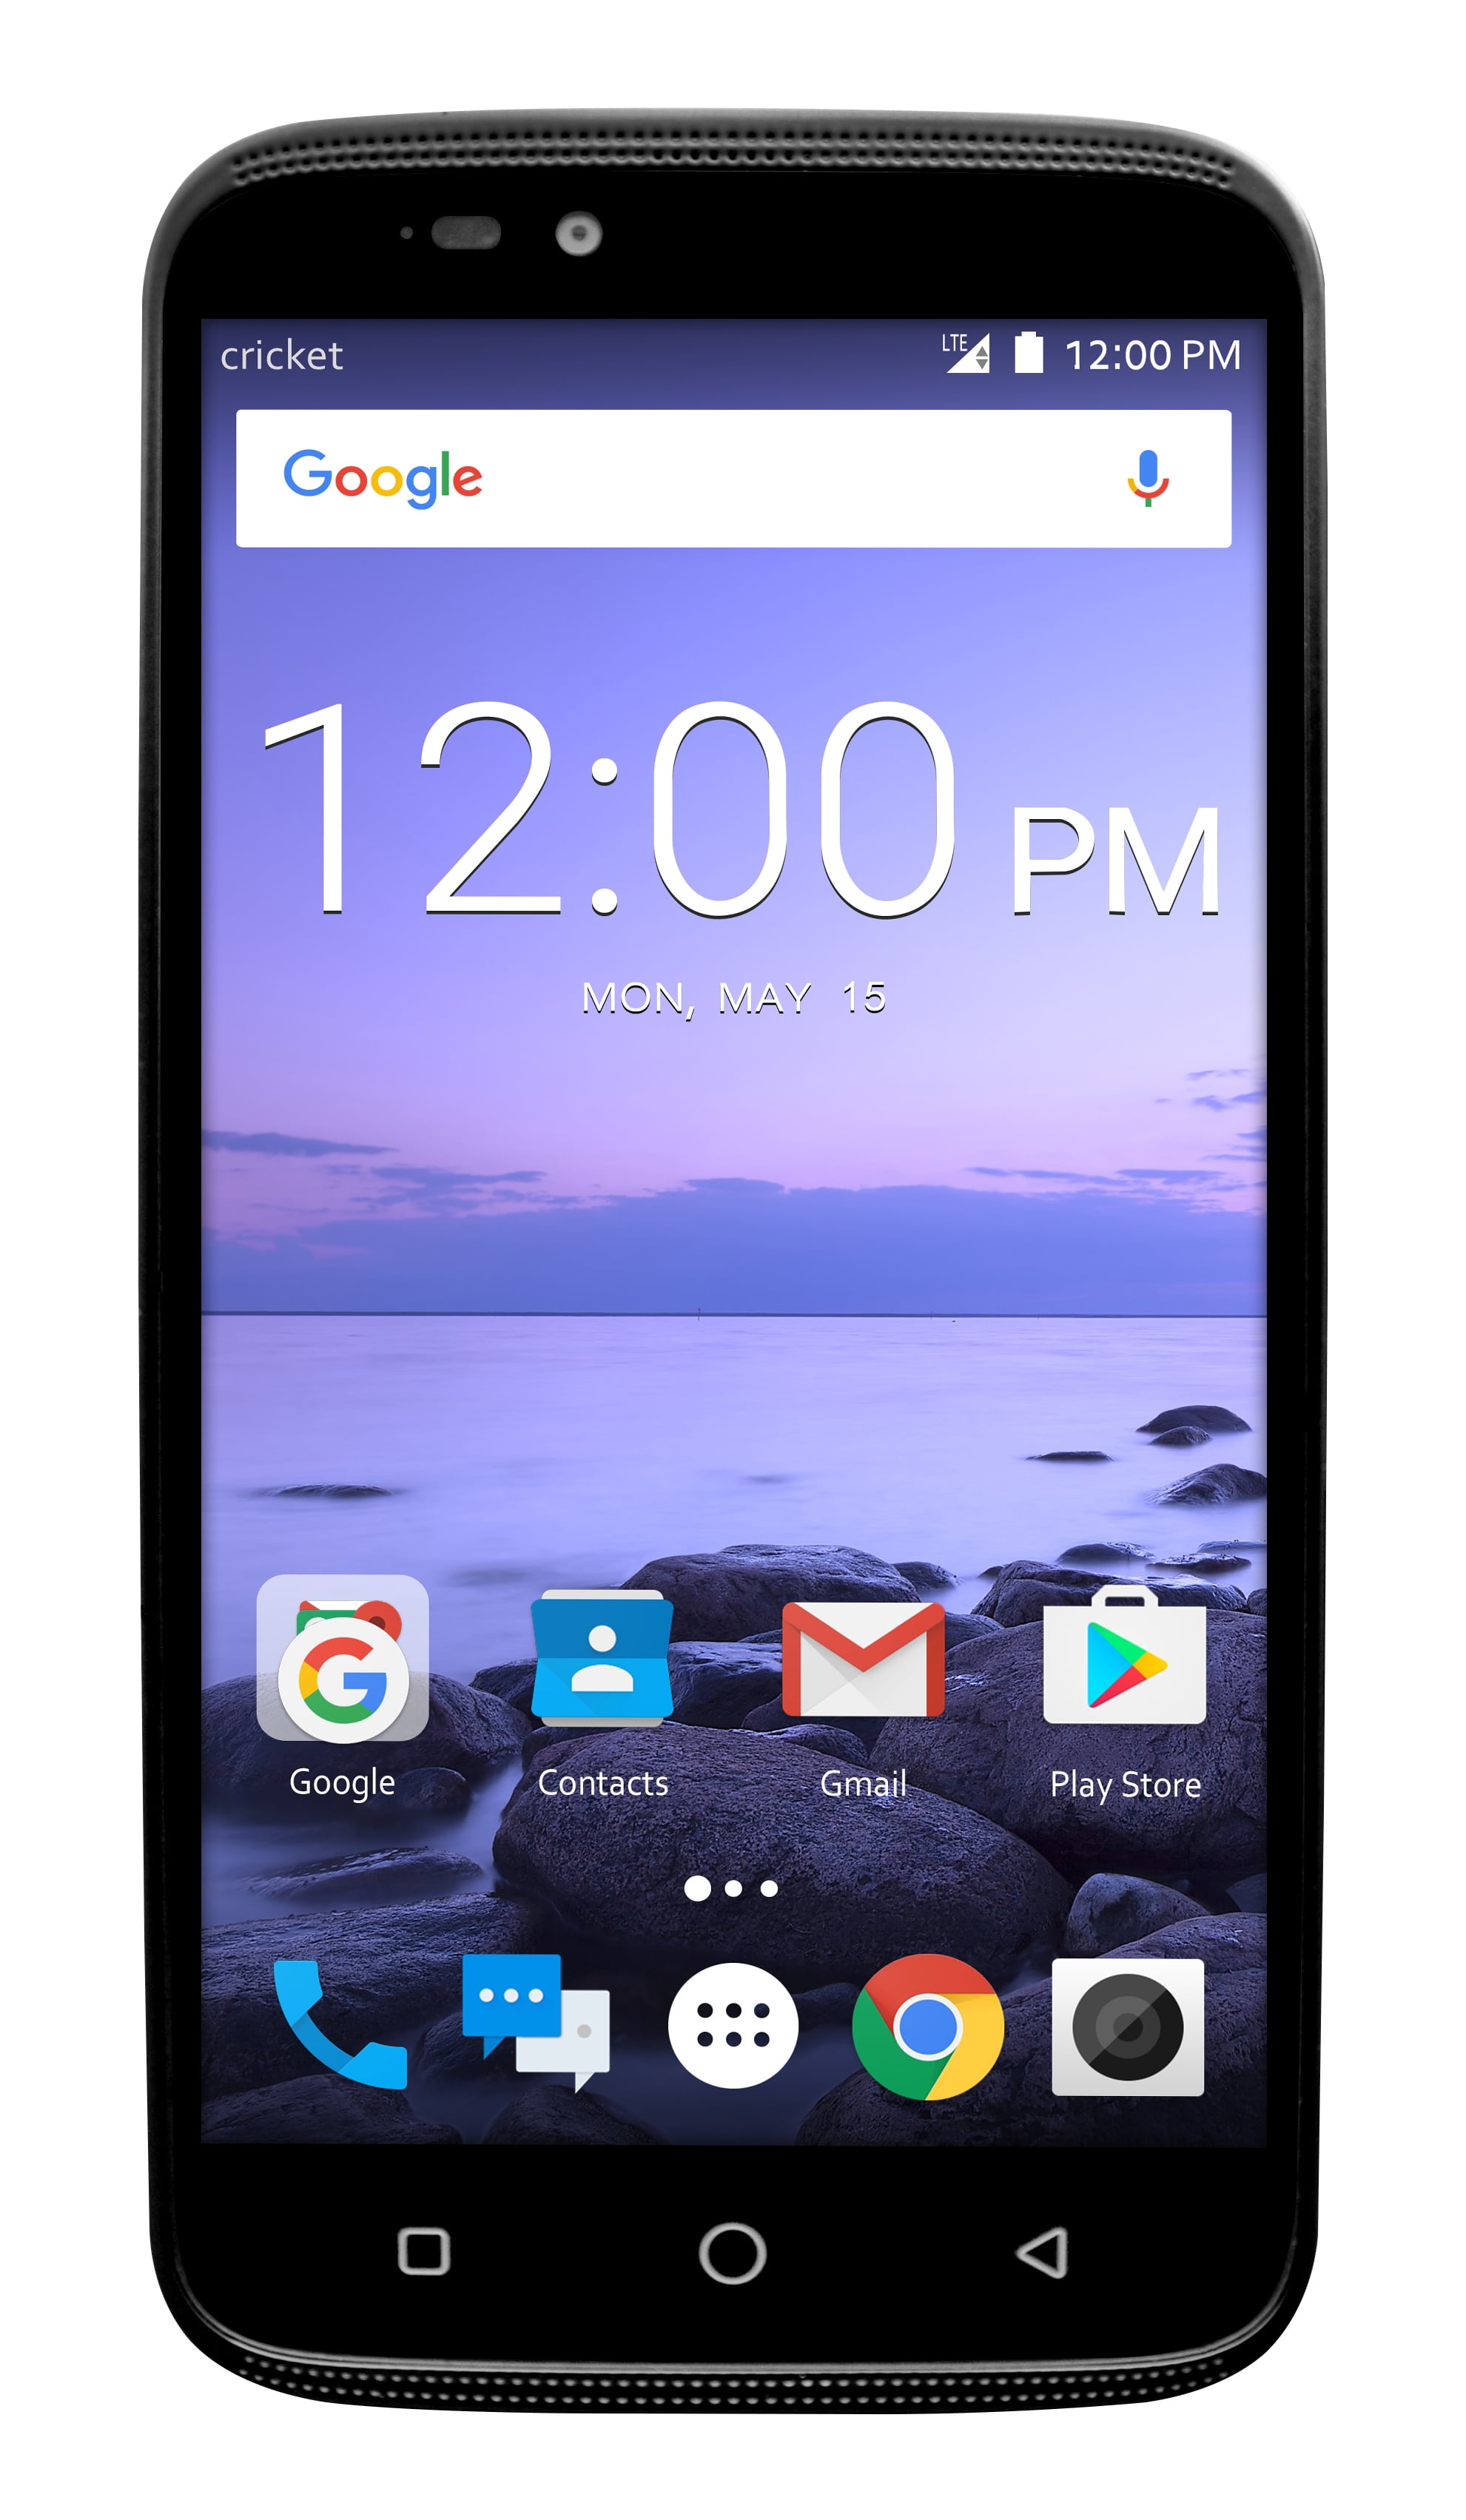 cricket-wireless-coolpad-canvas-16gb-prepaid-smartphone-black